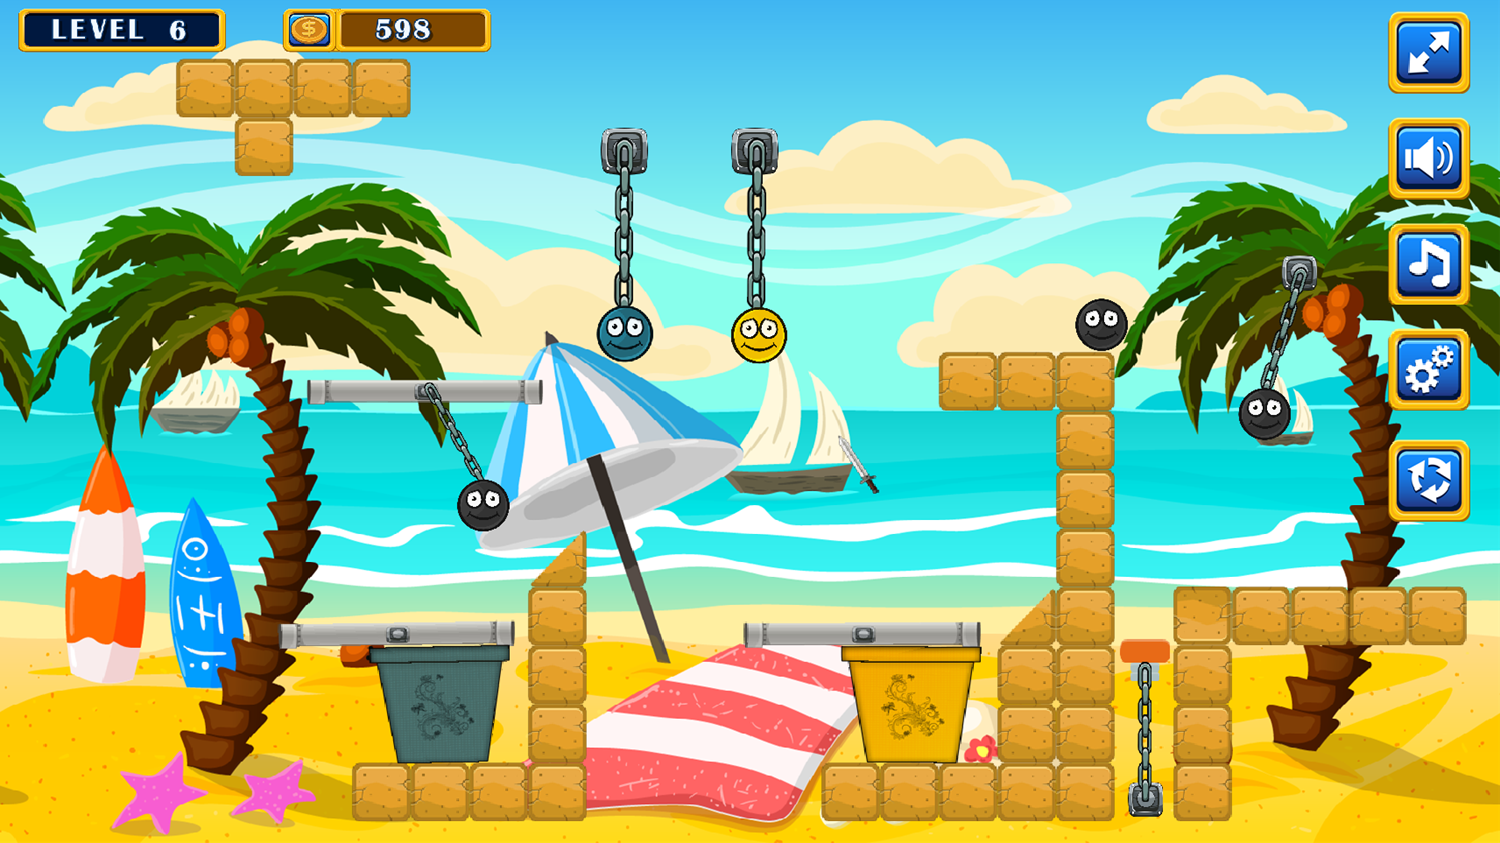 Beachball Fun Game Level Progress Screenshot.